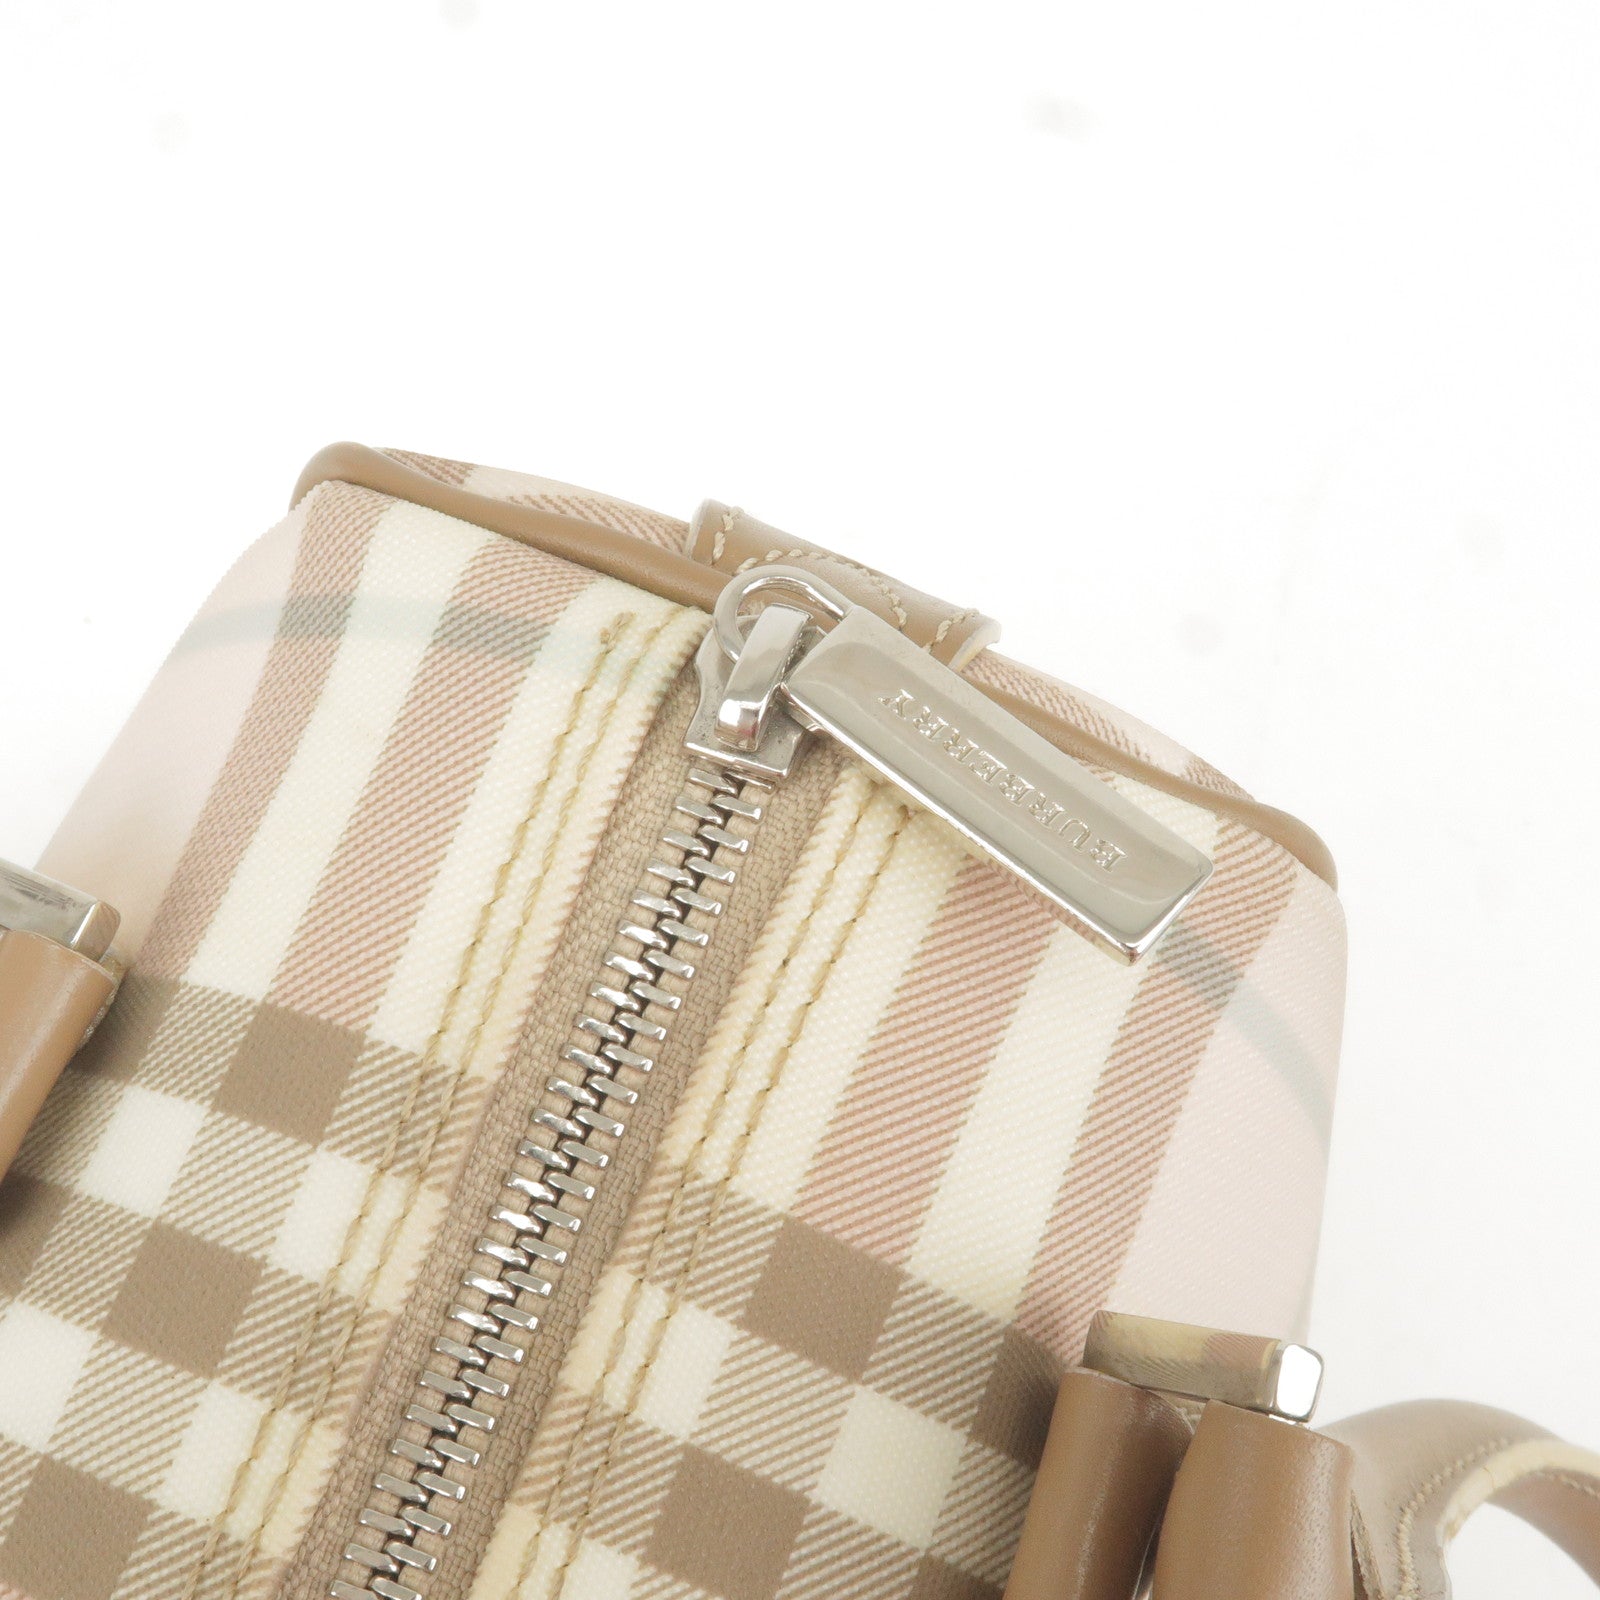 Canvas - Pink - olympia small shoulder bag burberry bag heather melange -  Nova - Plaid - Bag - Hand - Beige – Burberry Eyewear check detail round  sunglasses - BURBERRY - Leather